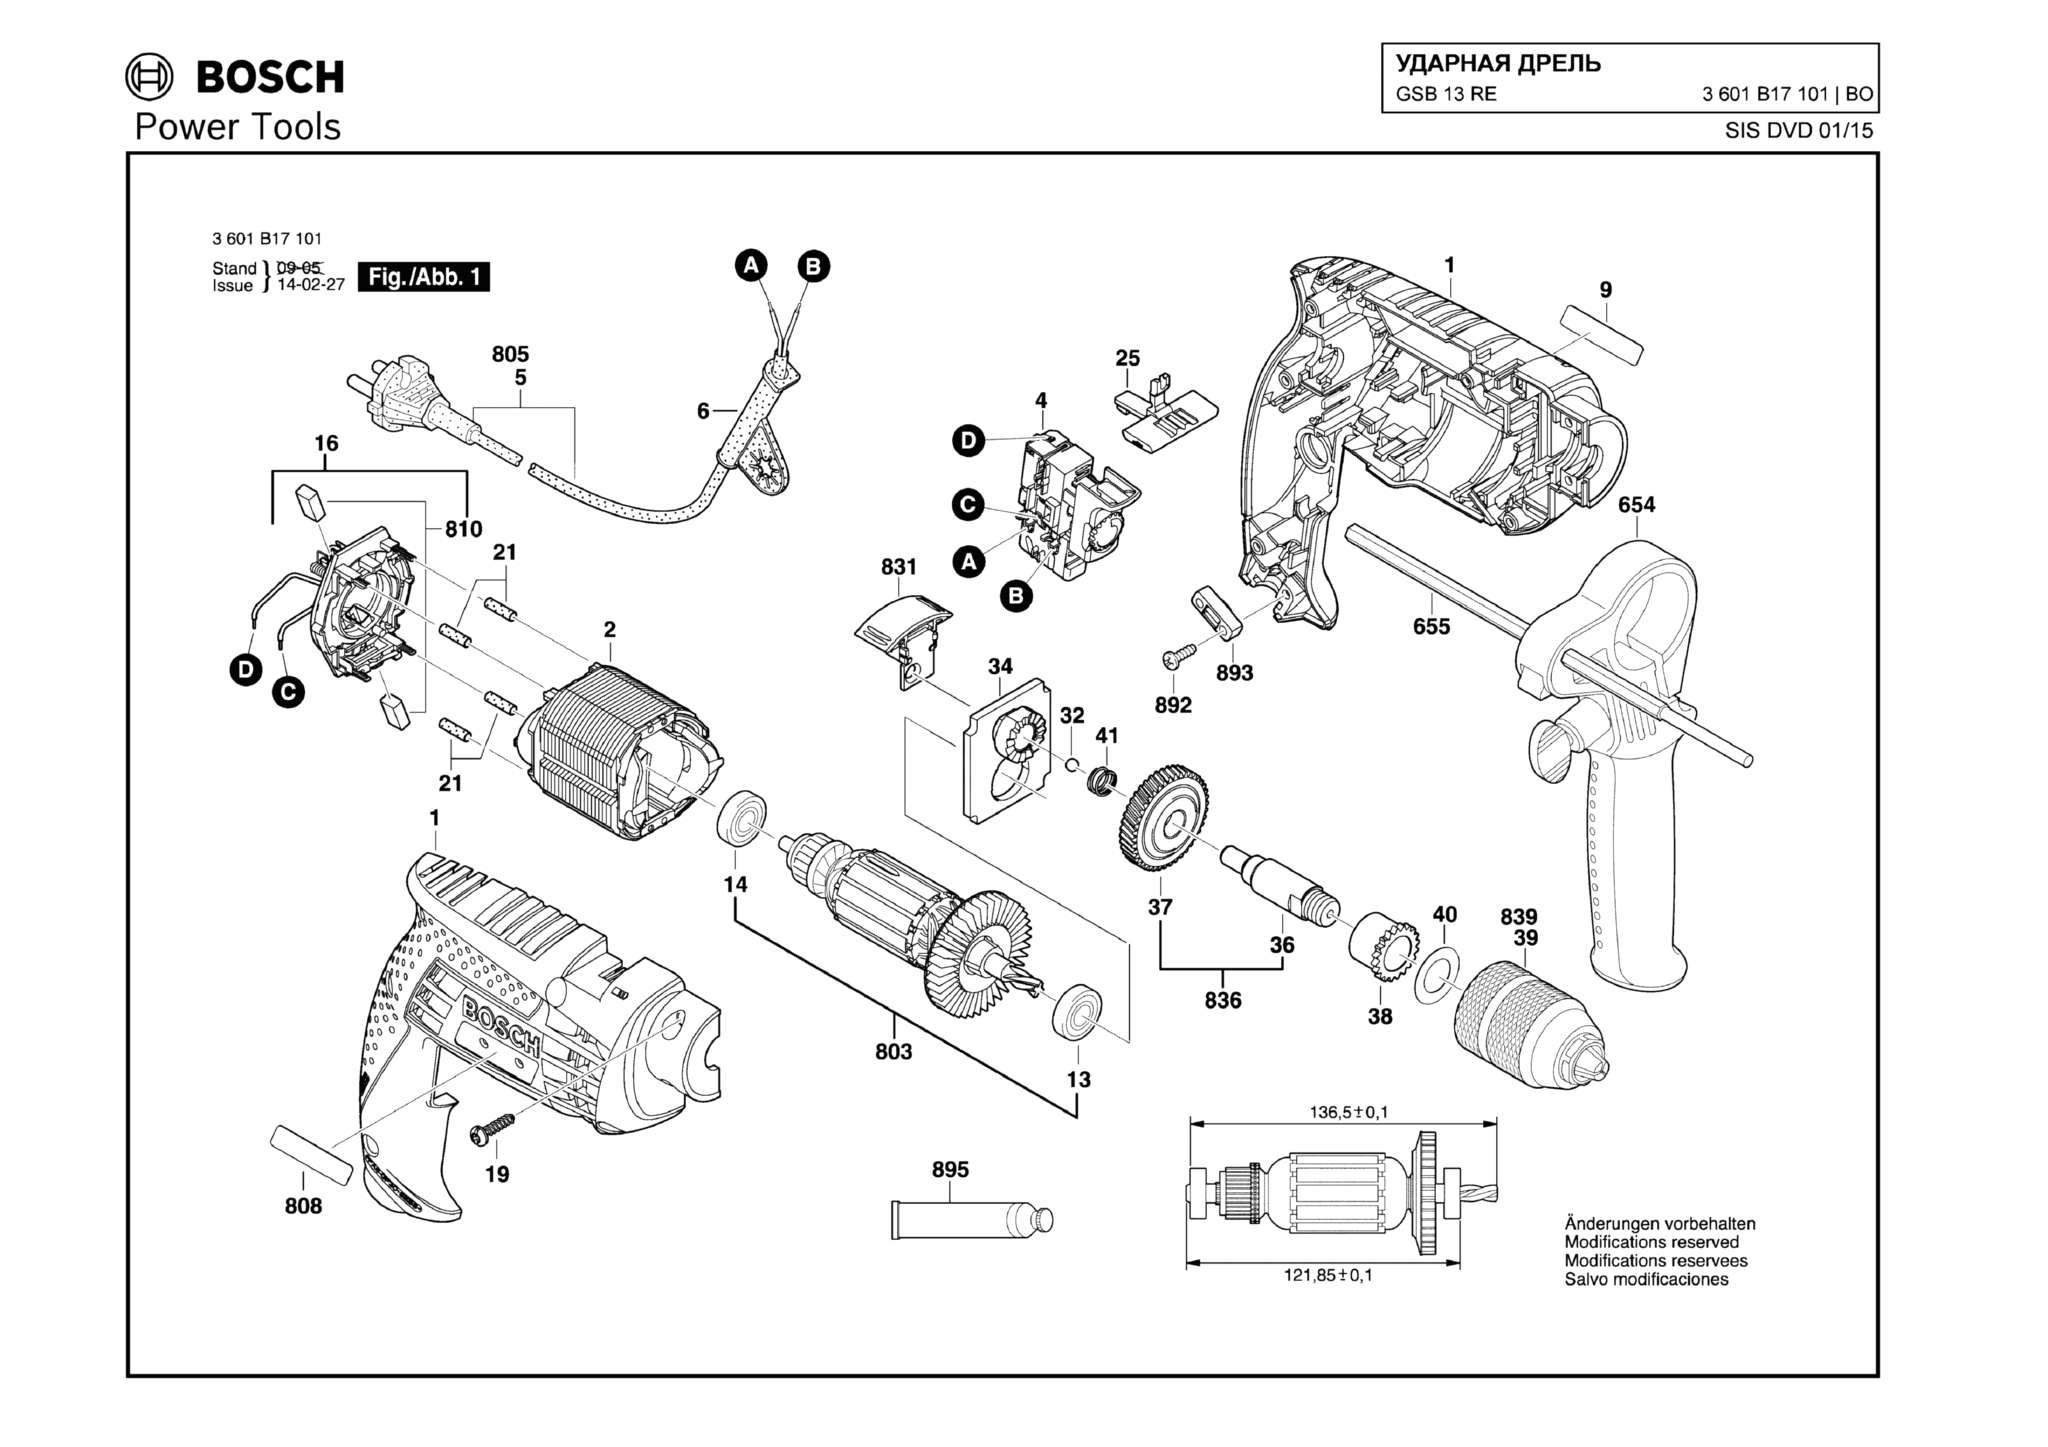 Запчасти, схема и деталировка Bosch GSB 13 RE (ТИП 3601B17101)